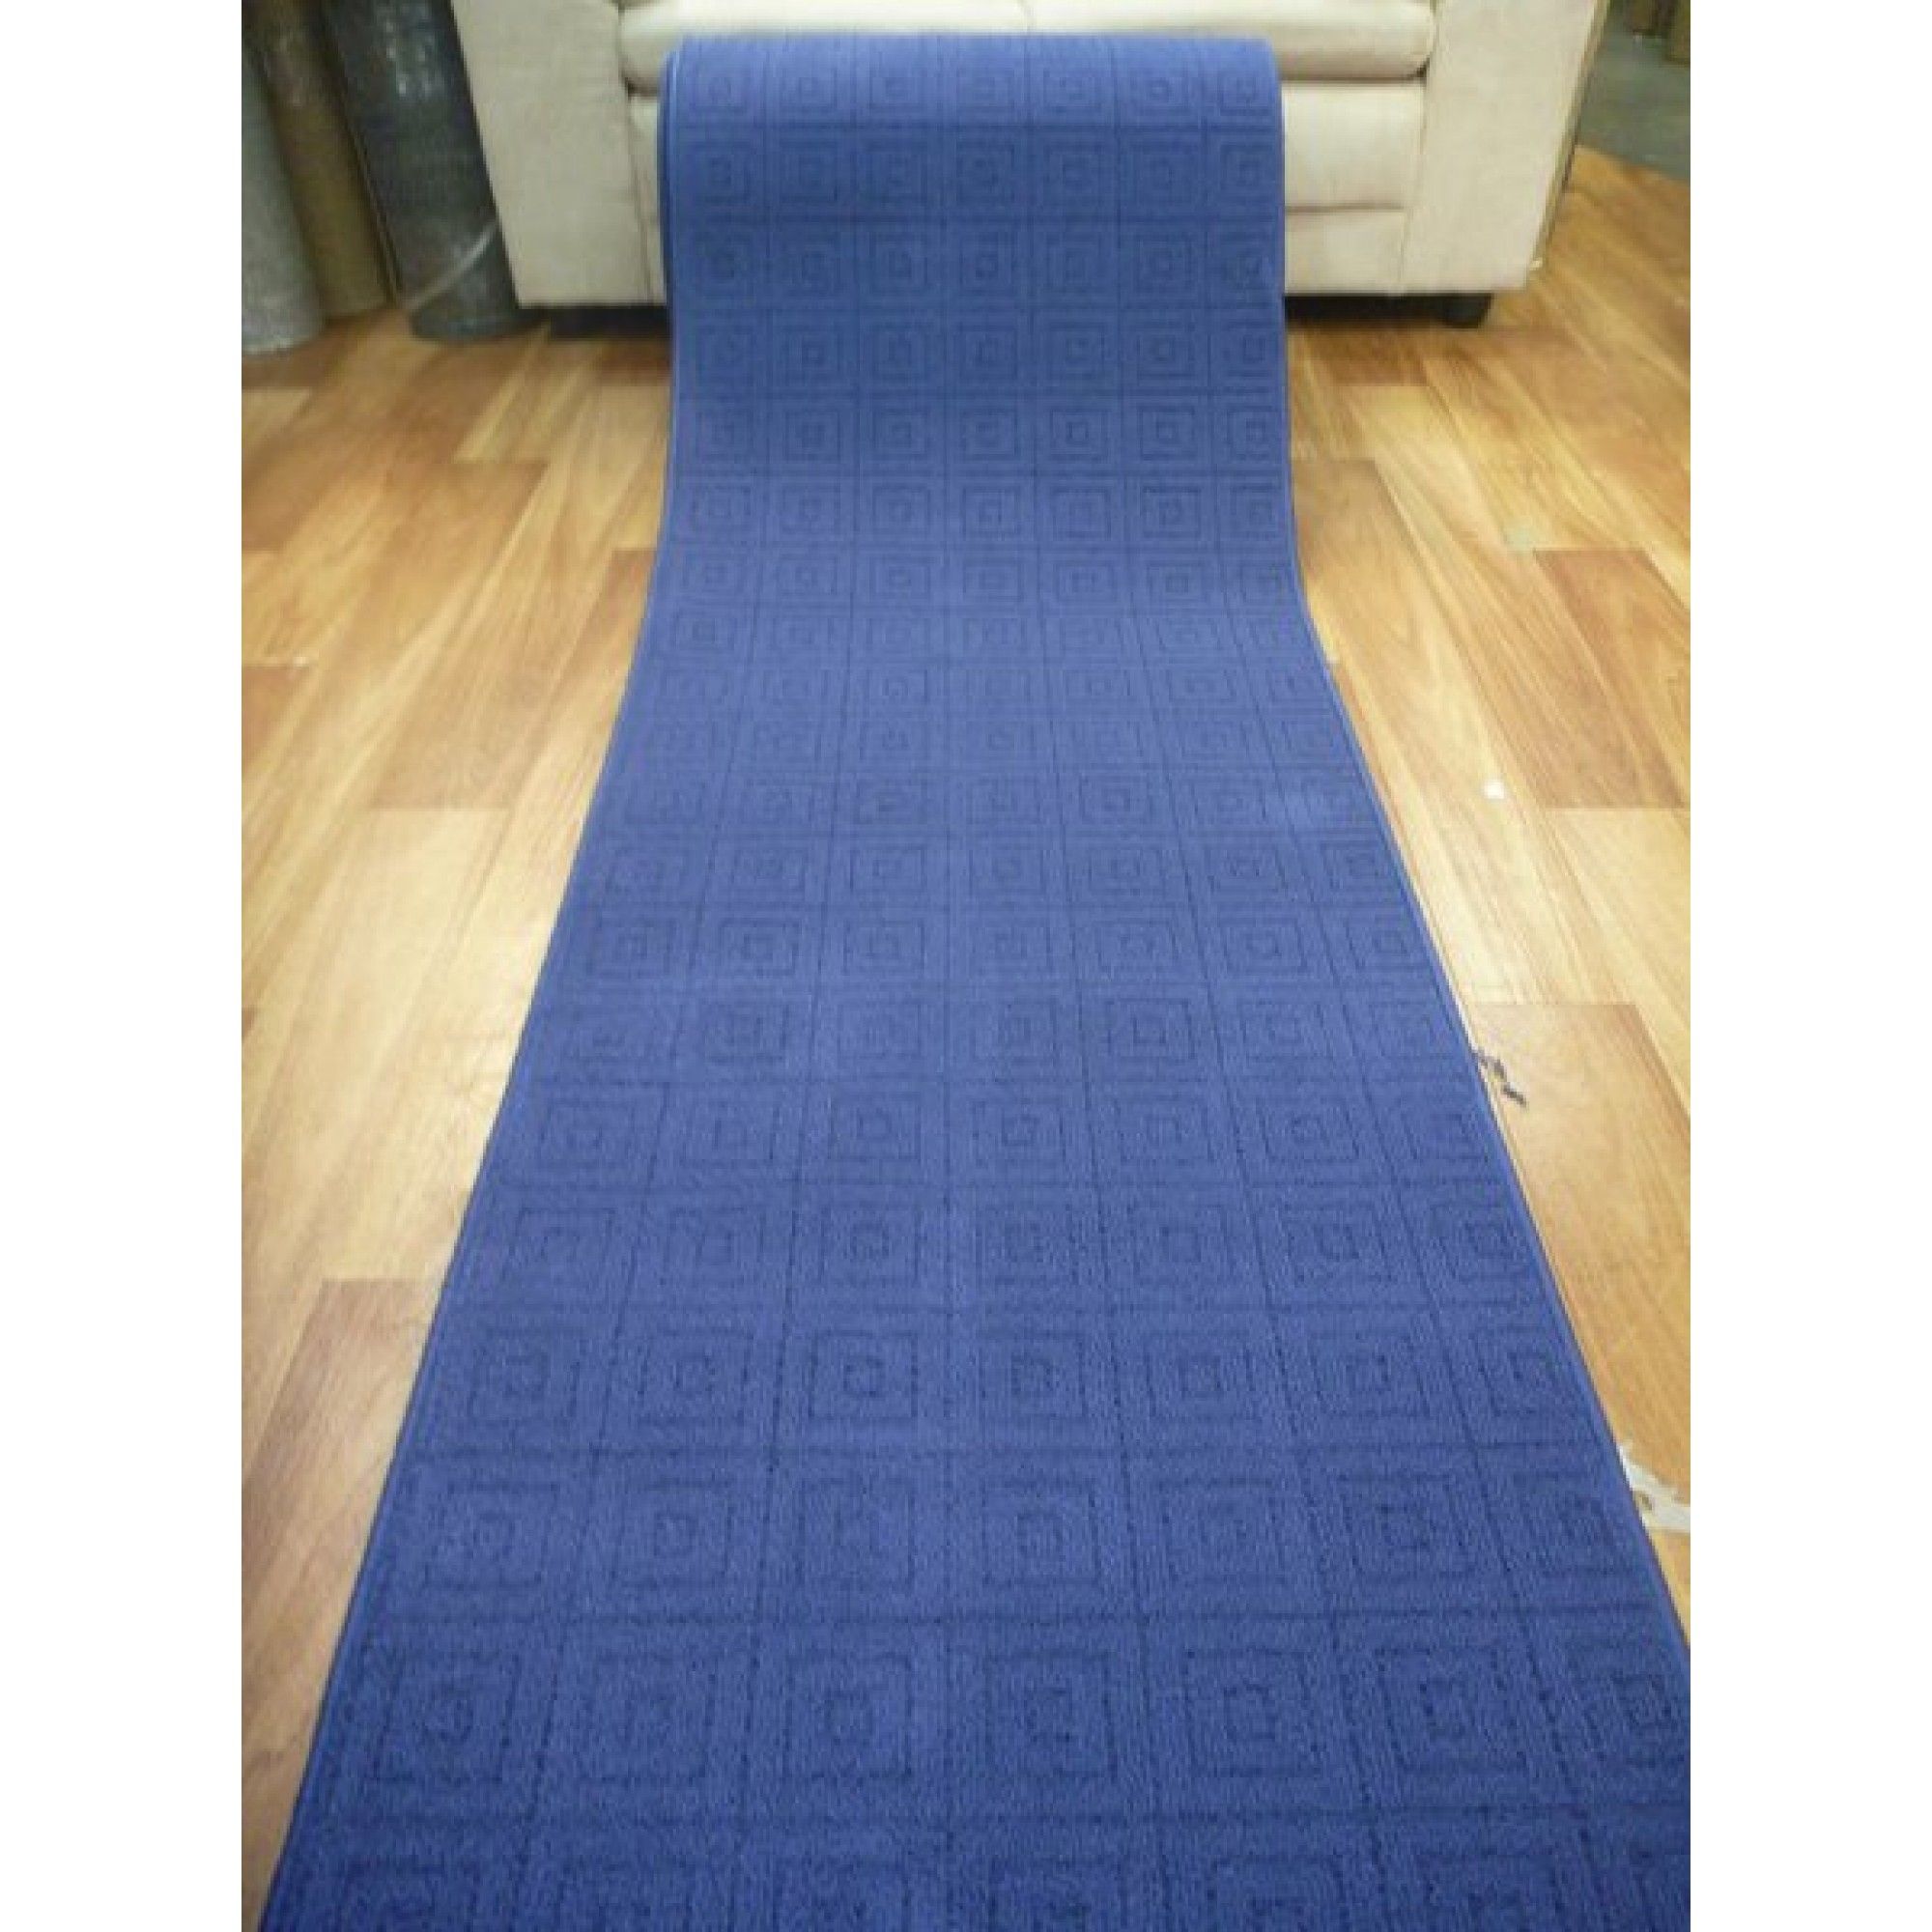 Flooring Lovely Hallway Runners For Floor Decor Idea Intended For Hallway Runners Blue (Photo 2 of 20)